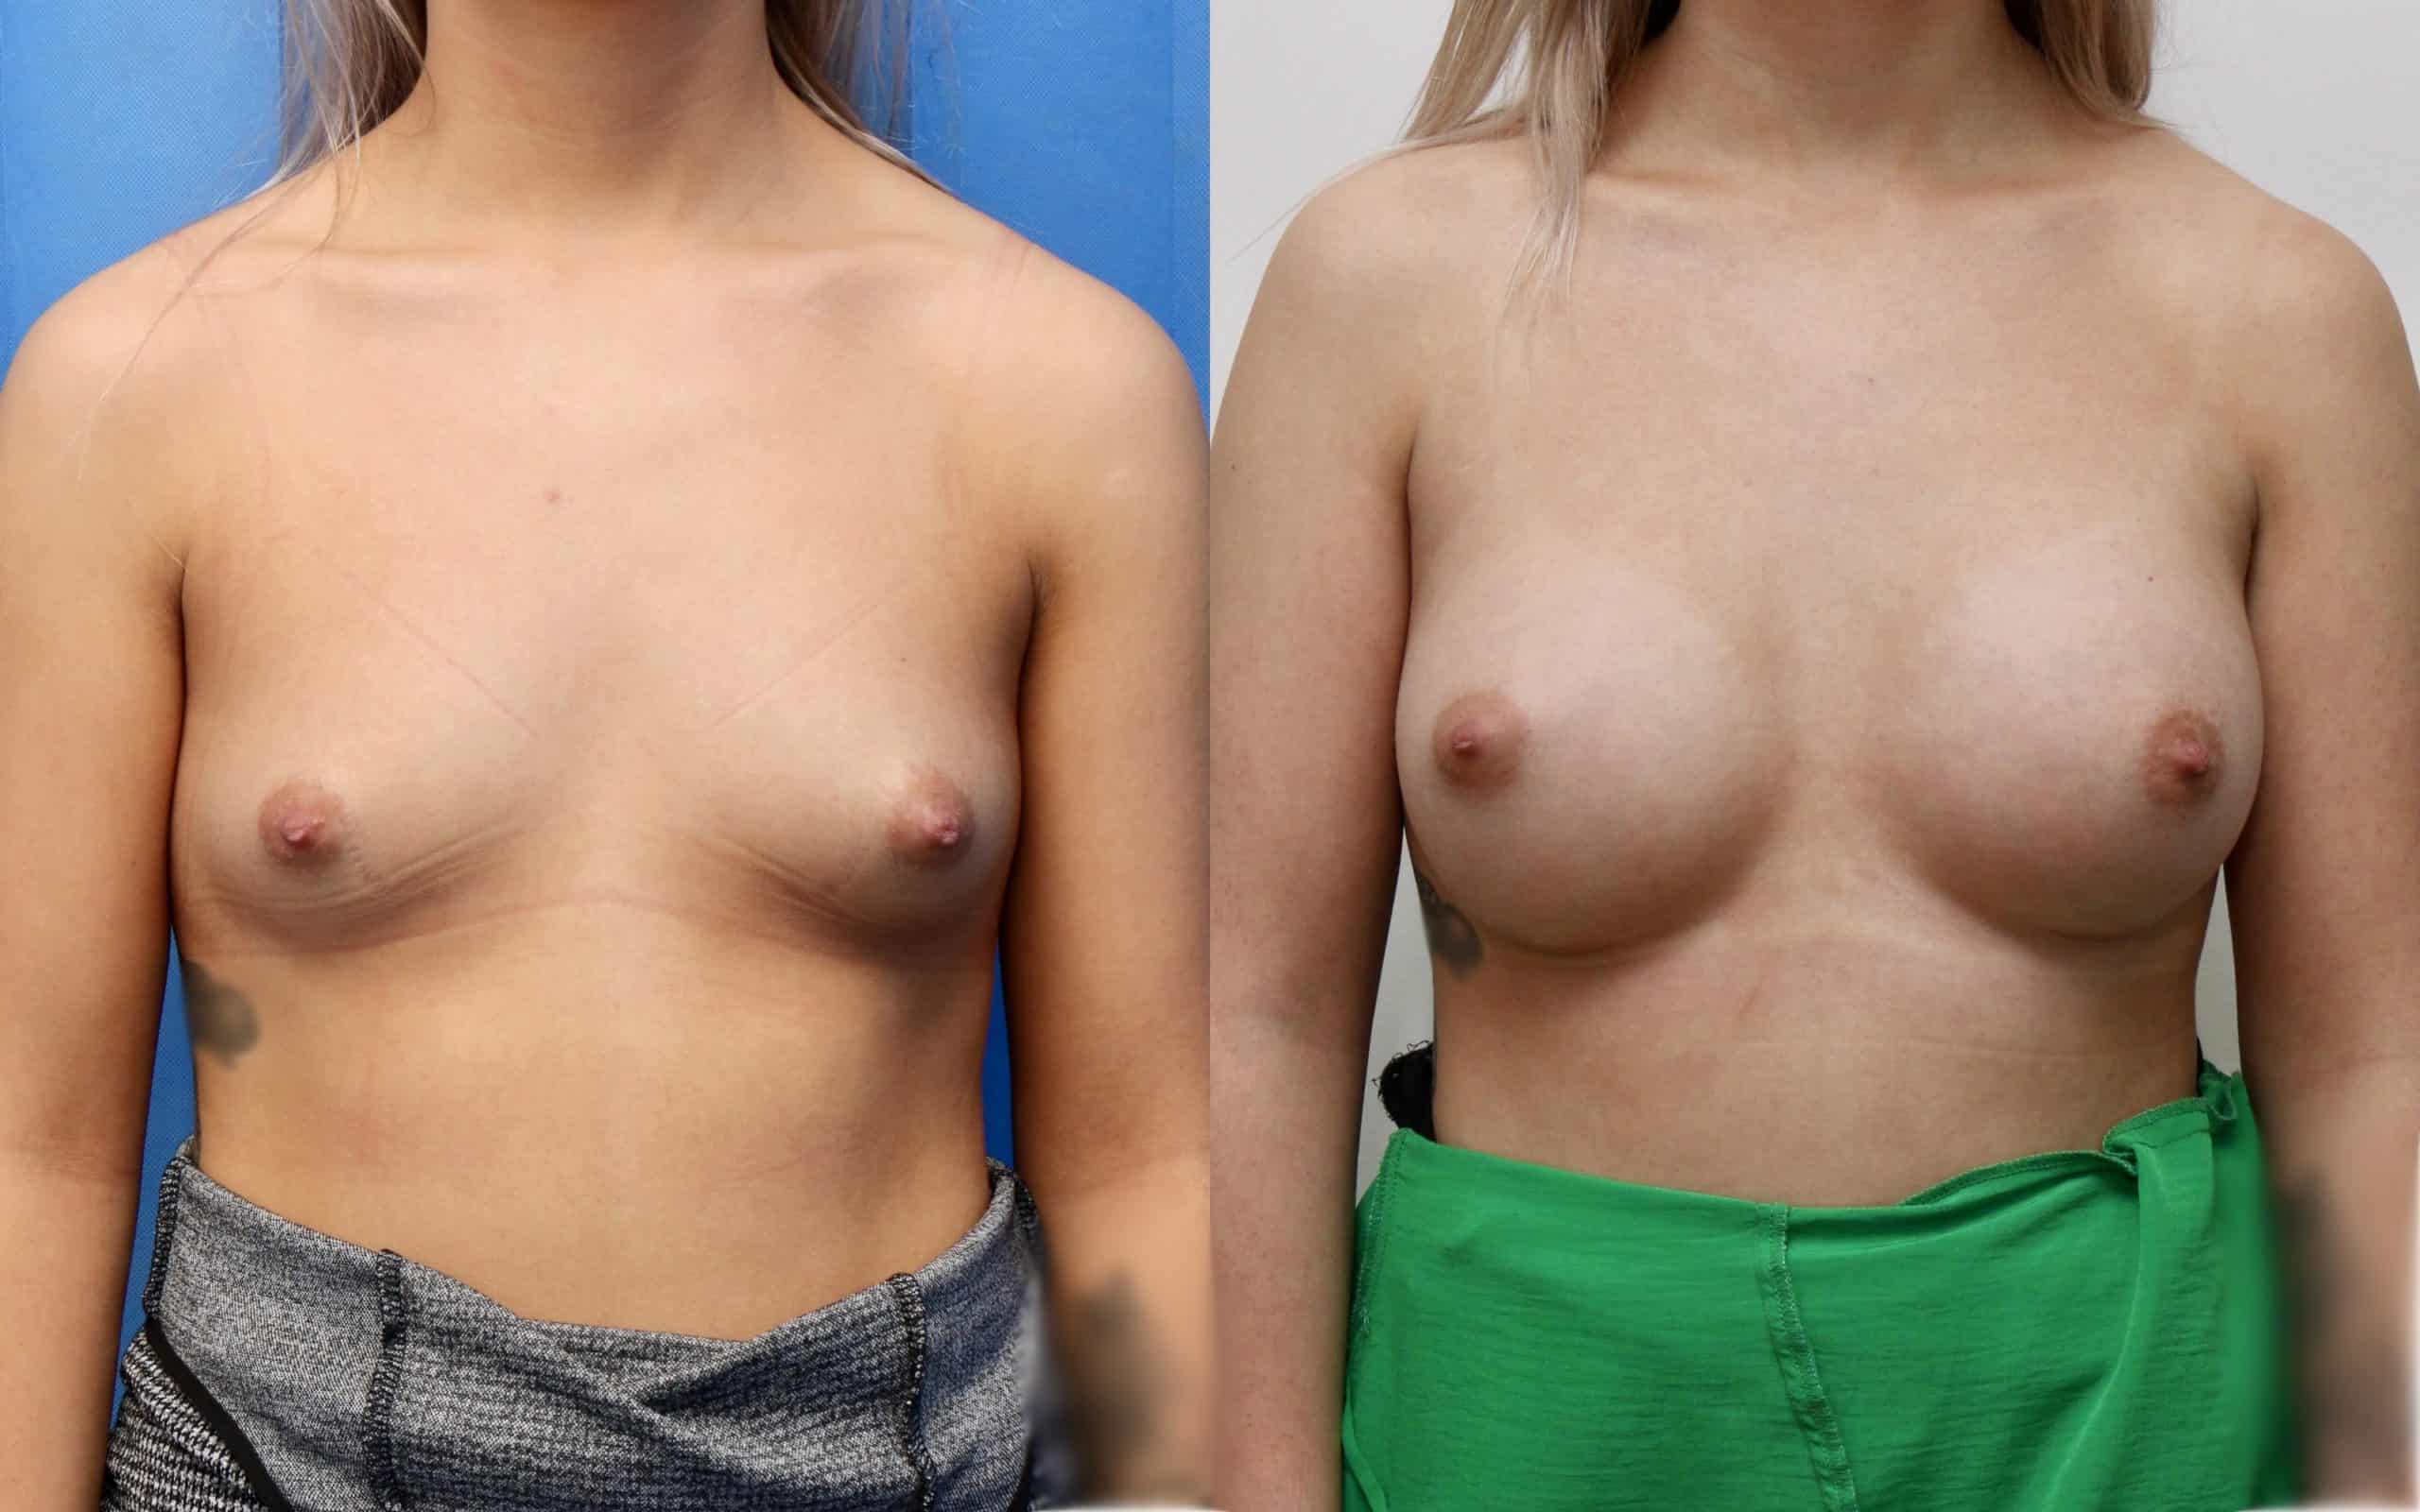 Breast implants 305cc